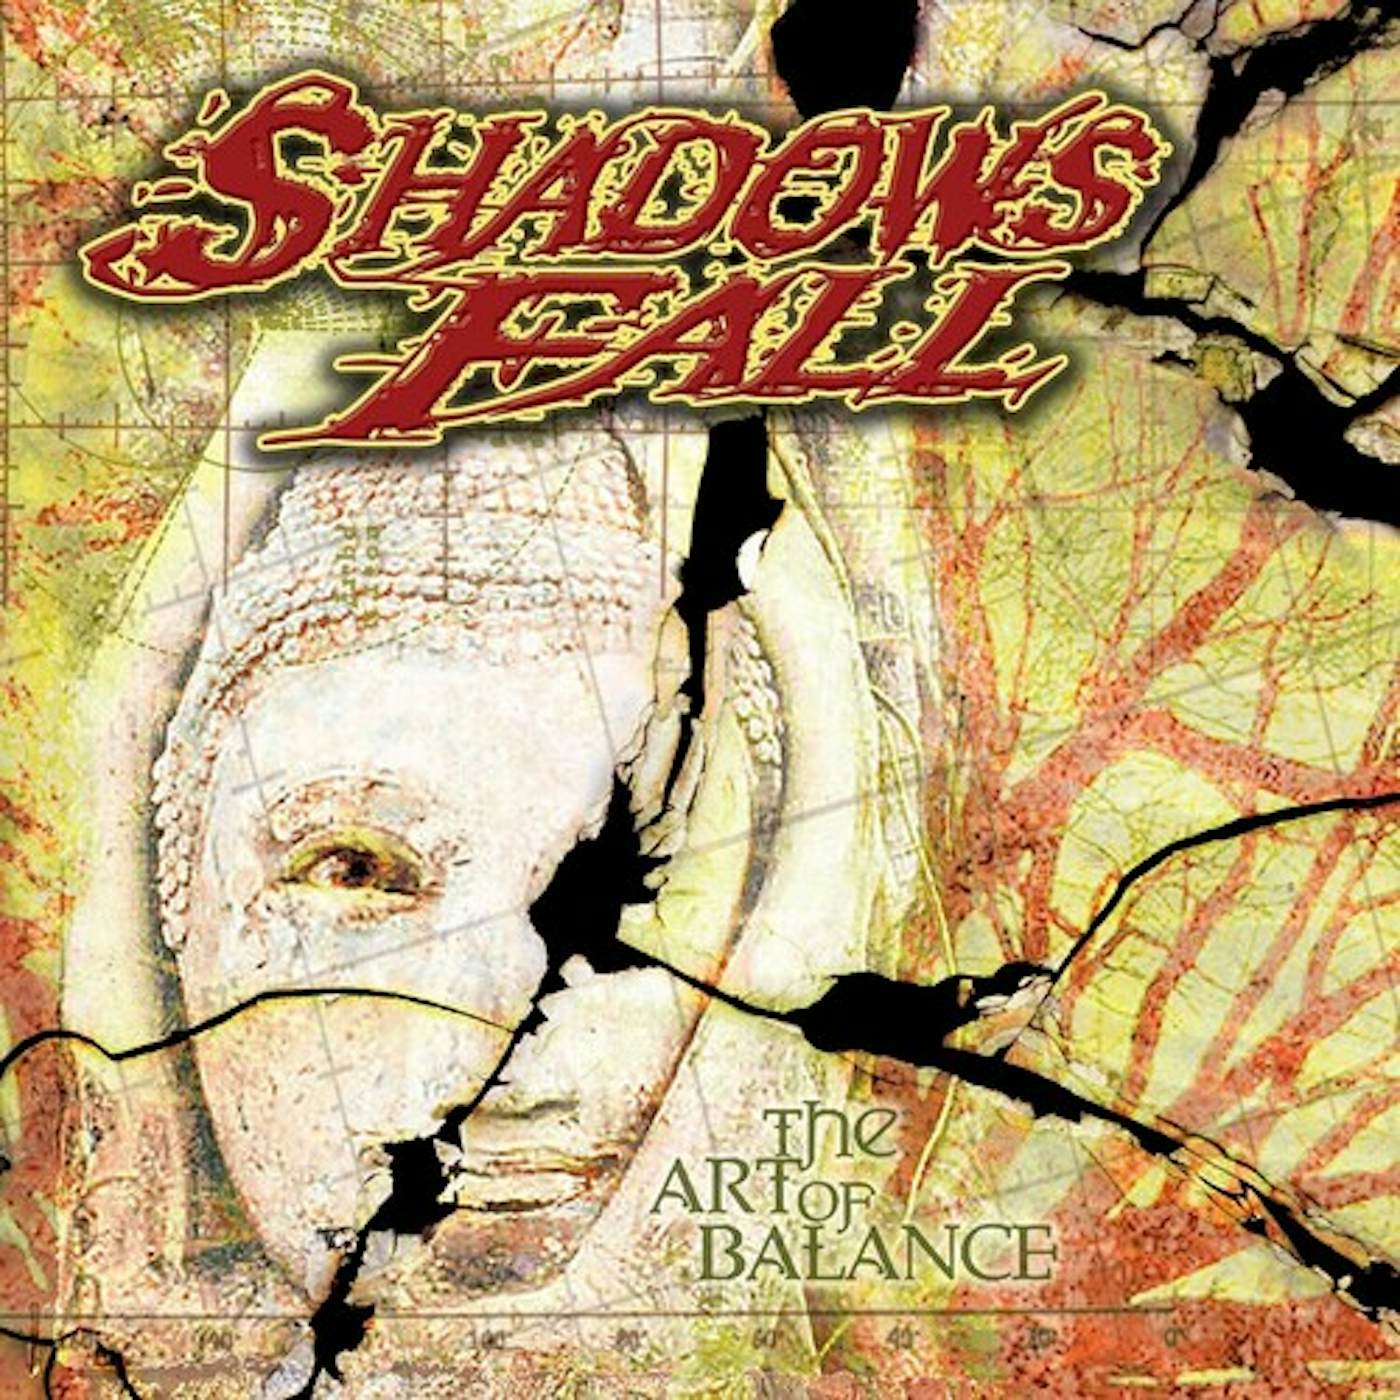 Shadows Fall ART BALANCE Vinyl Record